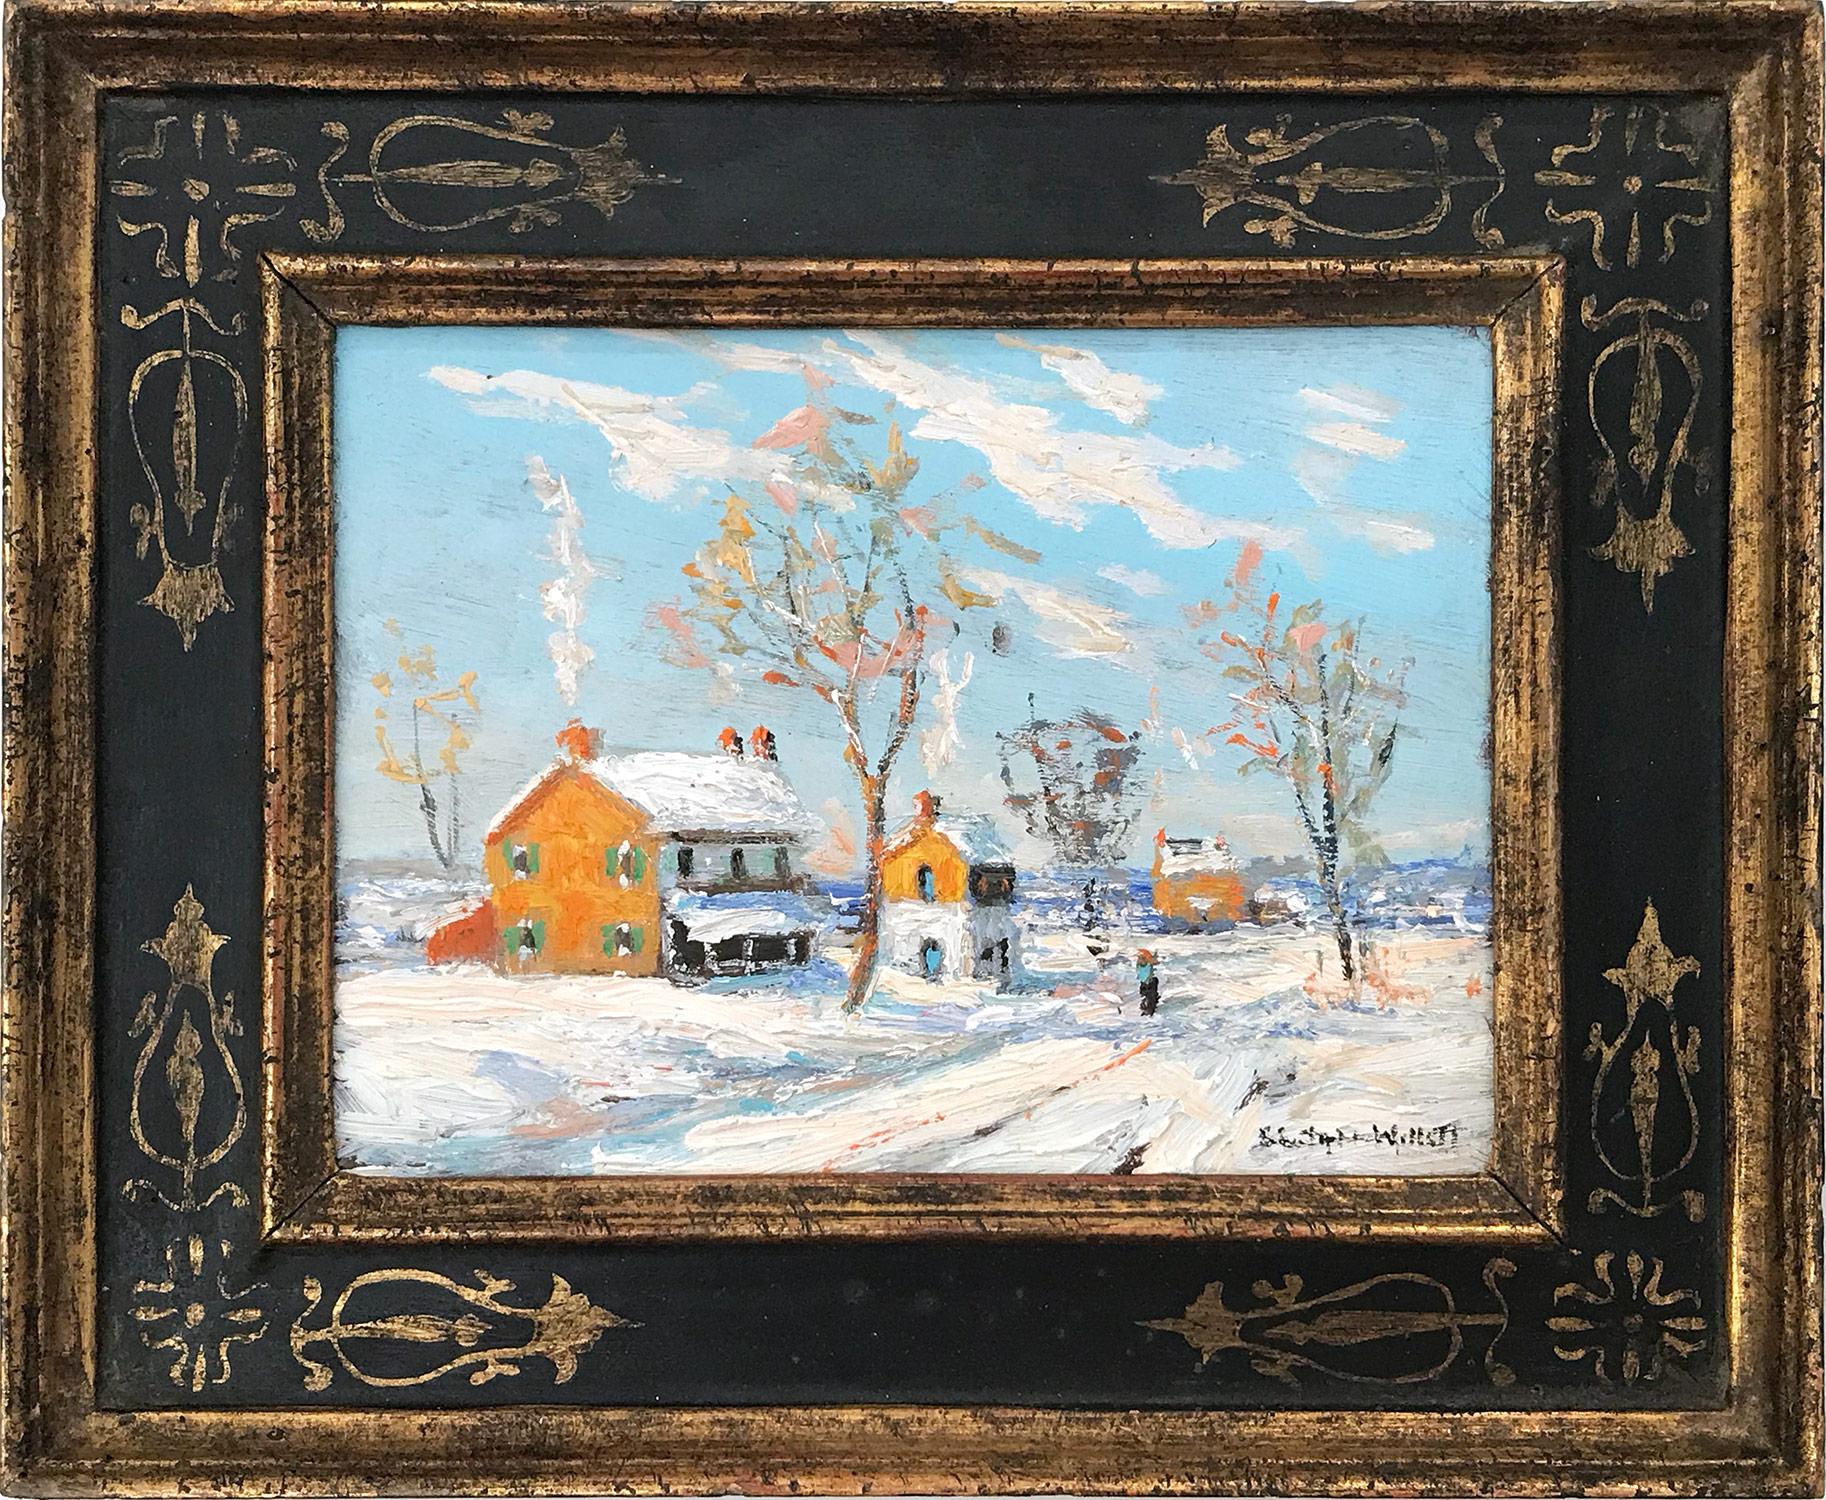 Christopher Willett Landscape Painting - "Dec Snow" Dublin, Bucks County PA, Pastoral Winter Landscape Oil Painting